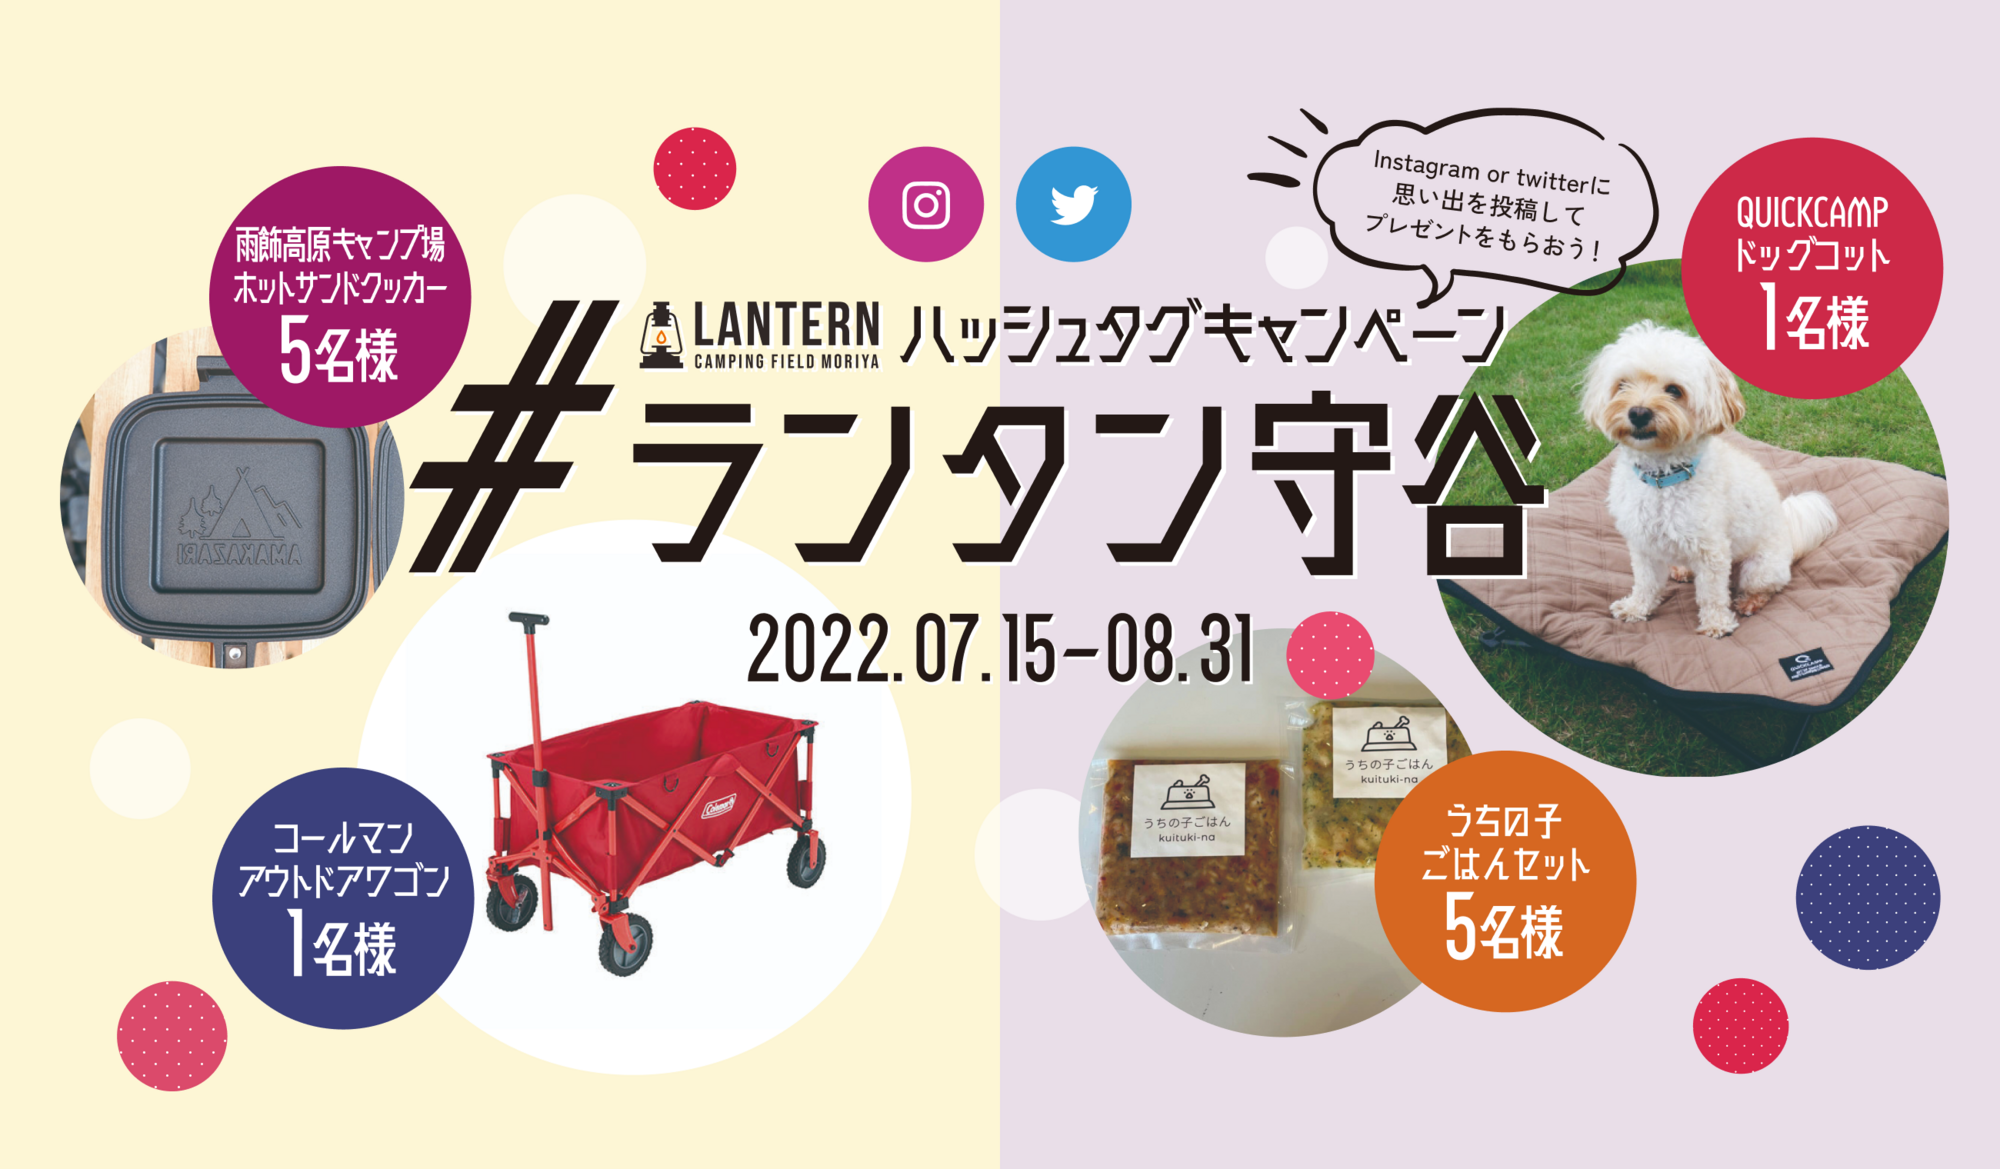 LANTERN CAMPING FIELD MORIYA ハッシュタグキャンペーン#ランタン守谷2022.07.15-08.31